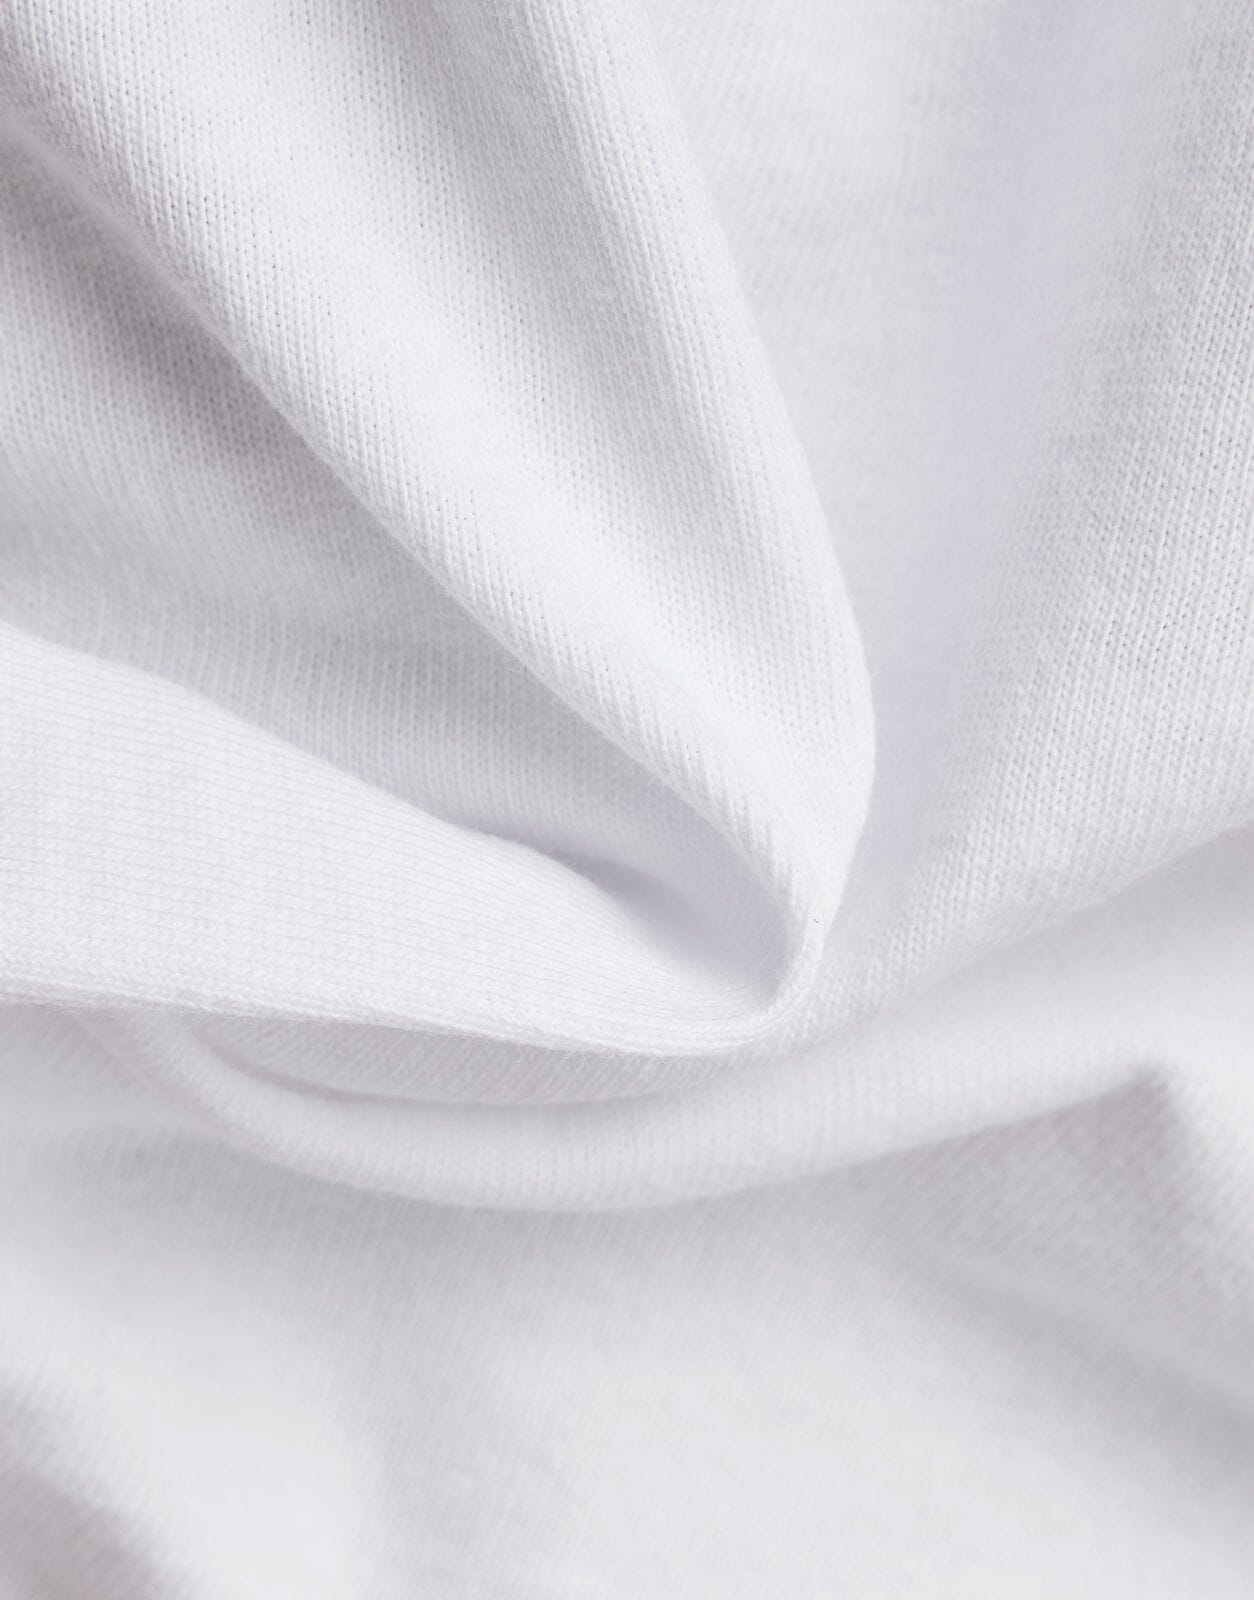 G-Star RAW Archive Vest Boxy T-Shirt White - Subwear